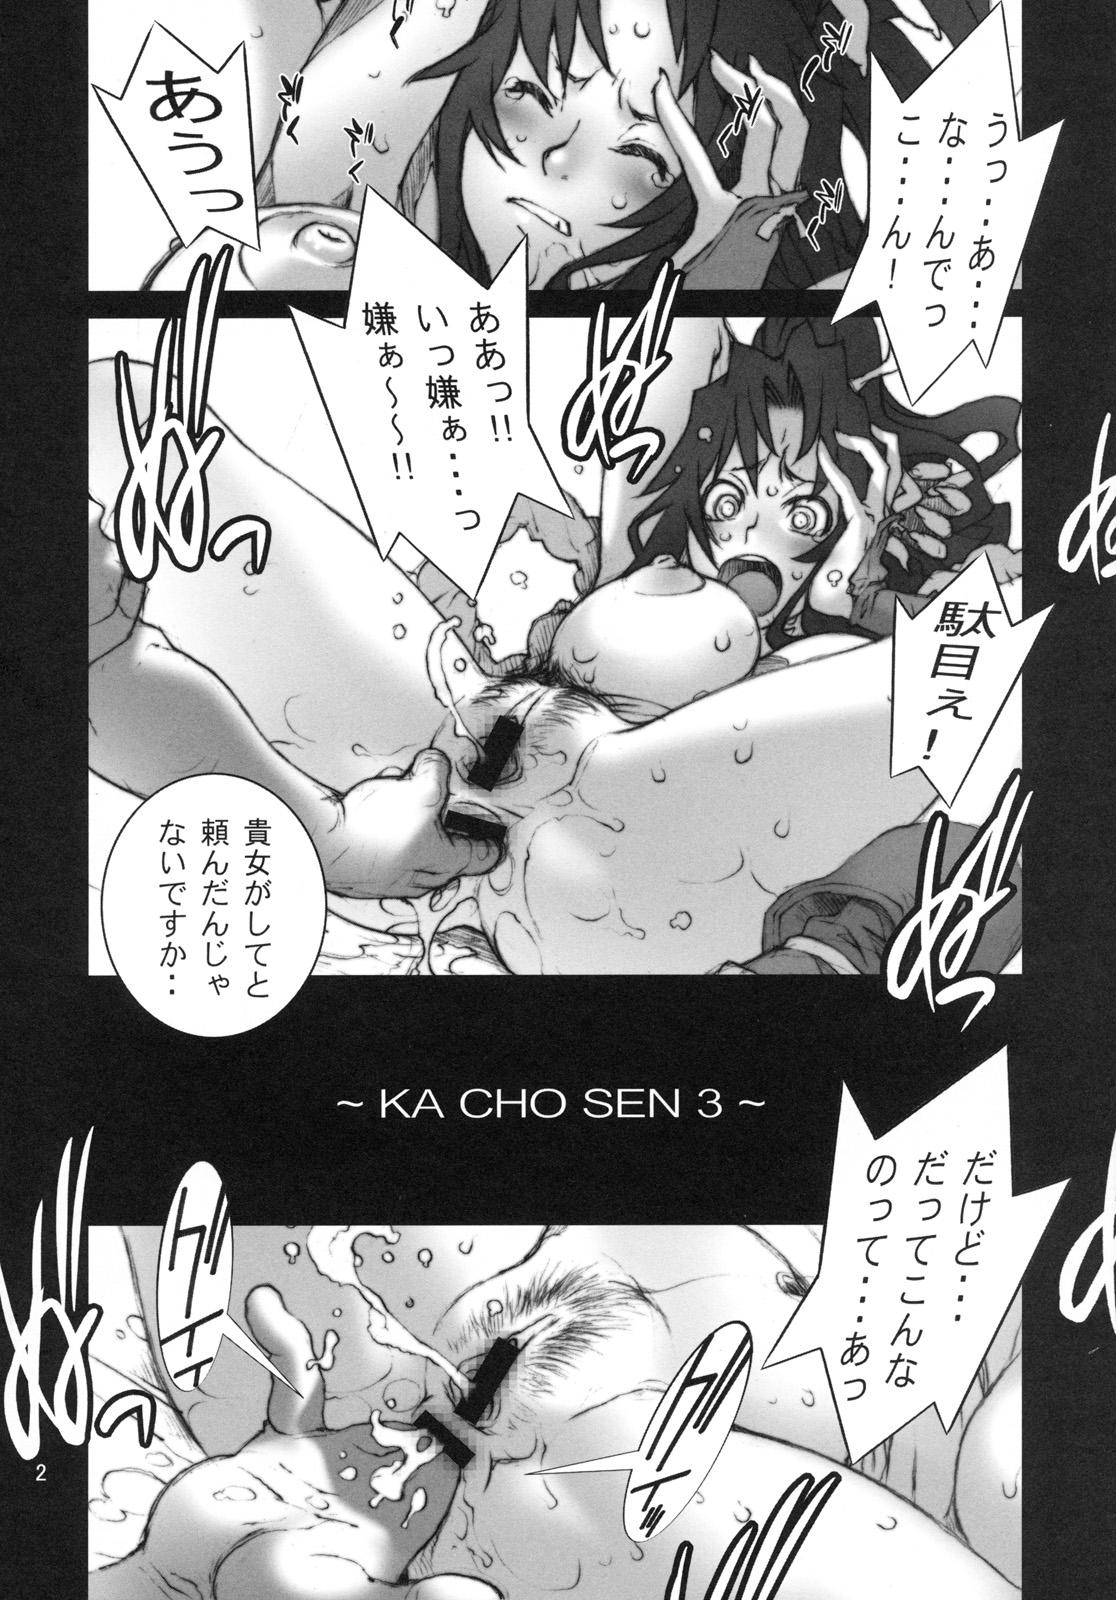 Retro Kachousen San - King of fighters Shoplifter - Page 3